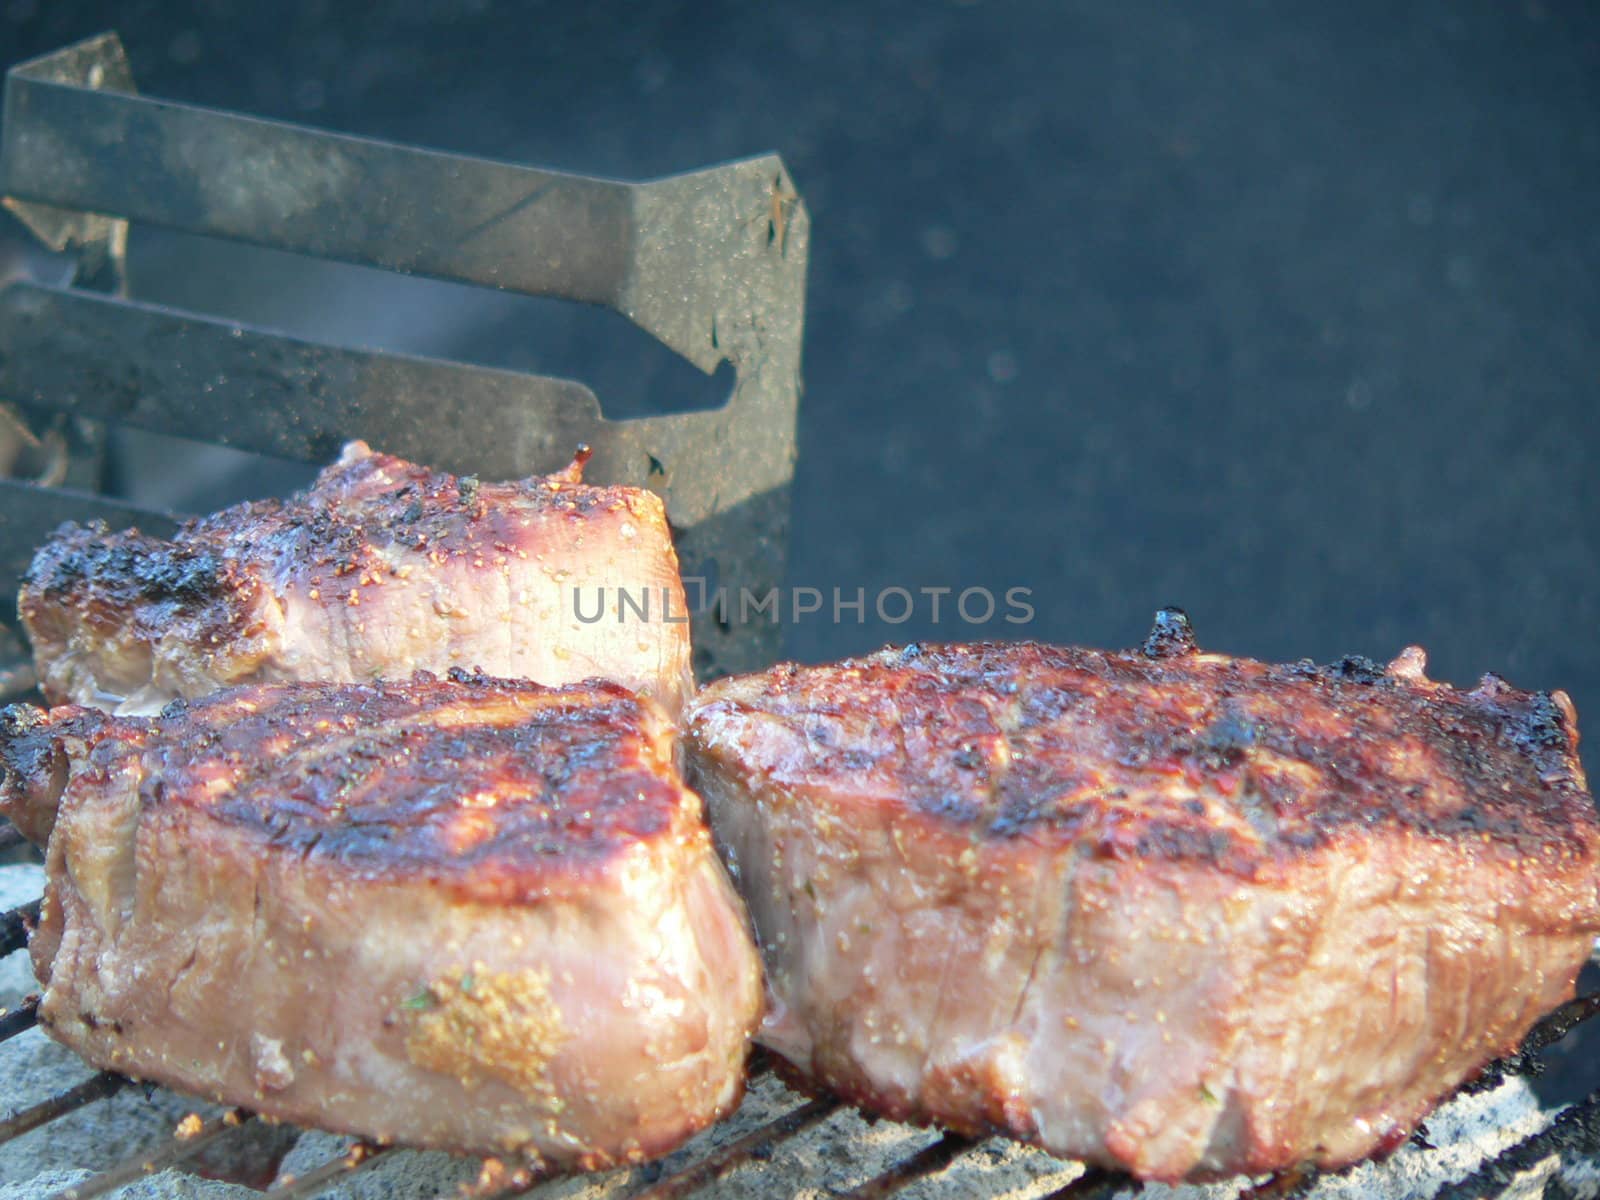 3 tenderloin steaks cooking on an charcoal grill